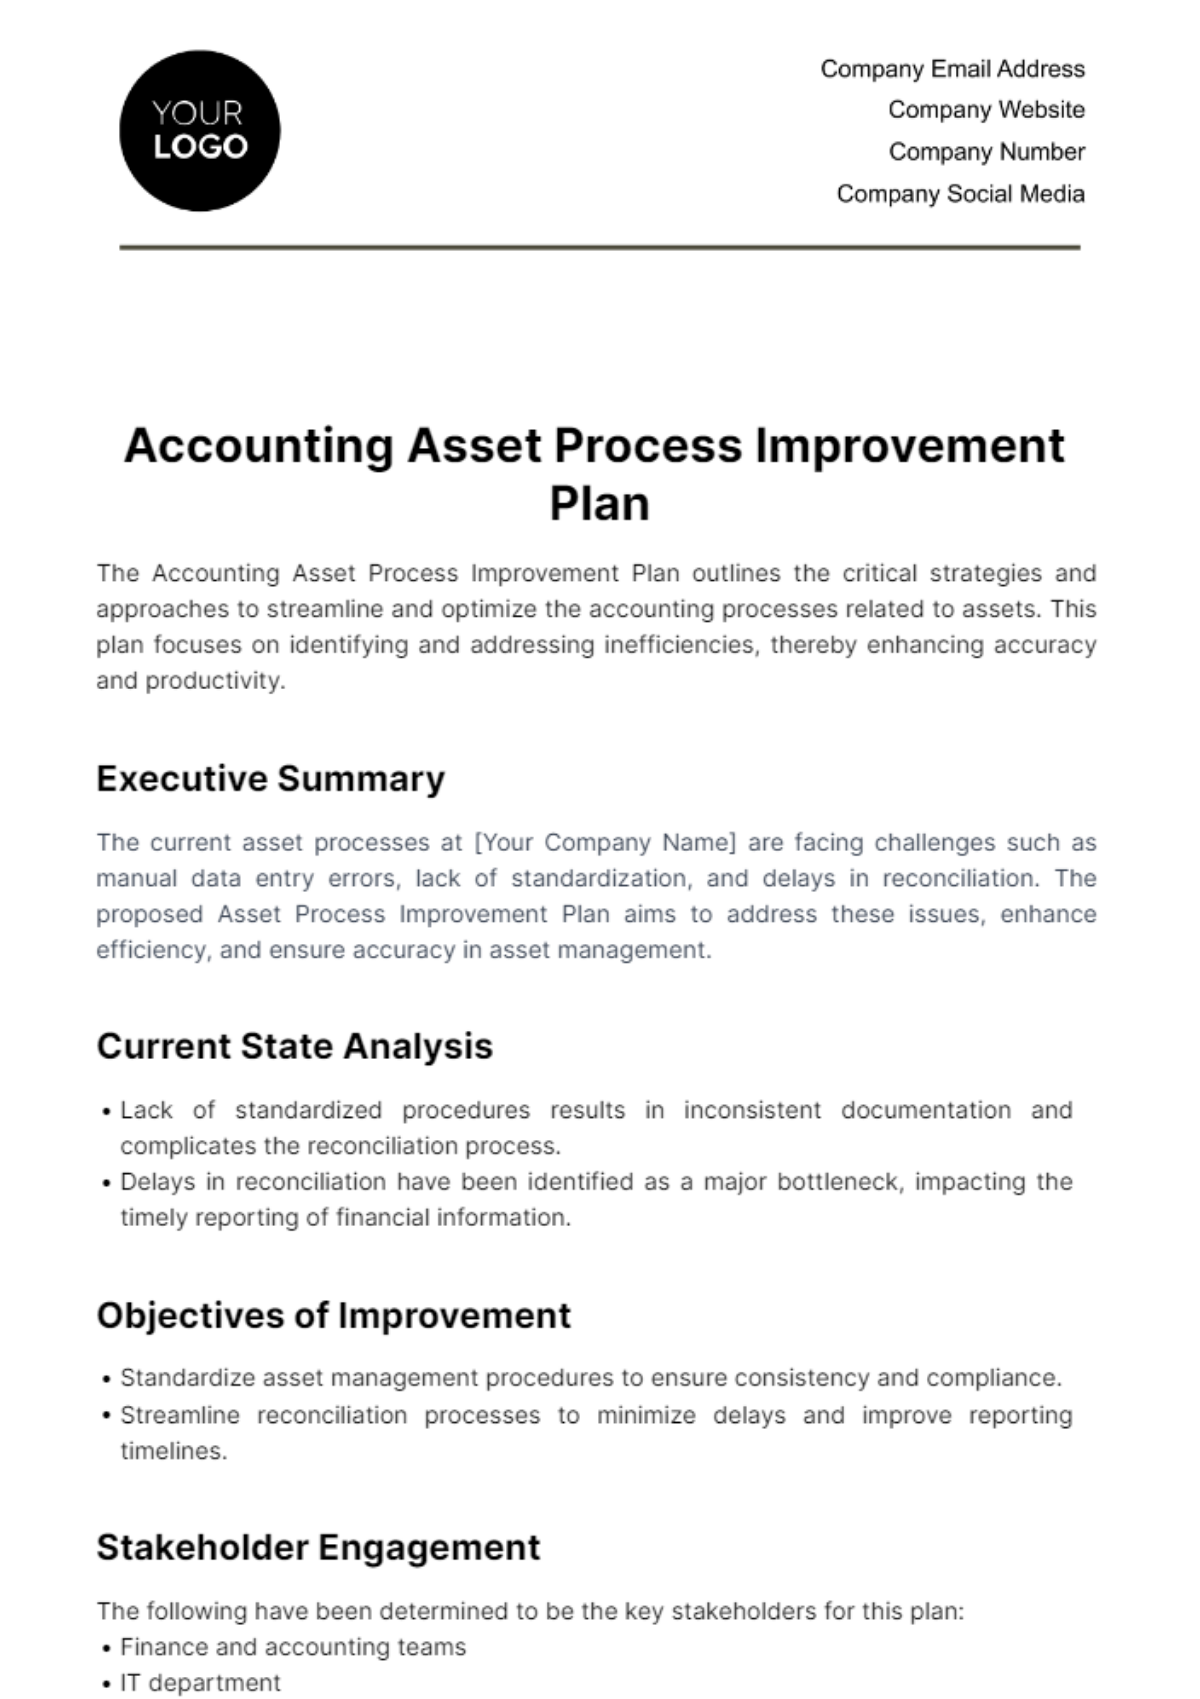 Free Accounting Asset Process Improvement Plan Template